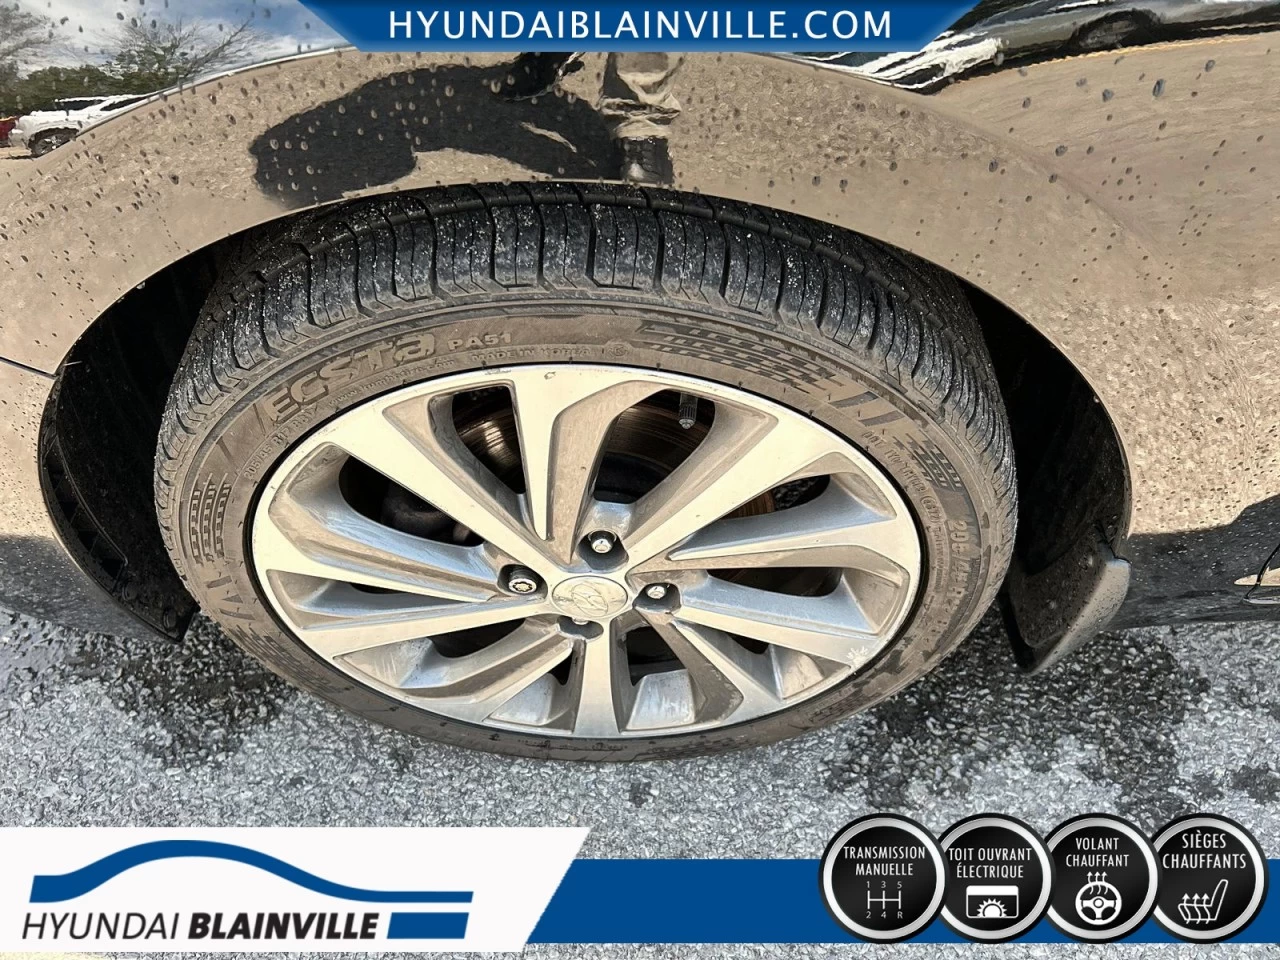 2019 Hyundai Accent ULTIMATE, MANUELLE, TOIT OUVRANT+ Image principale